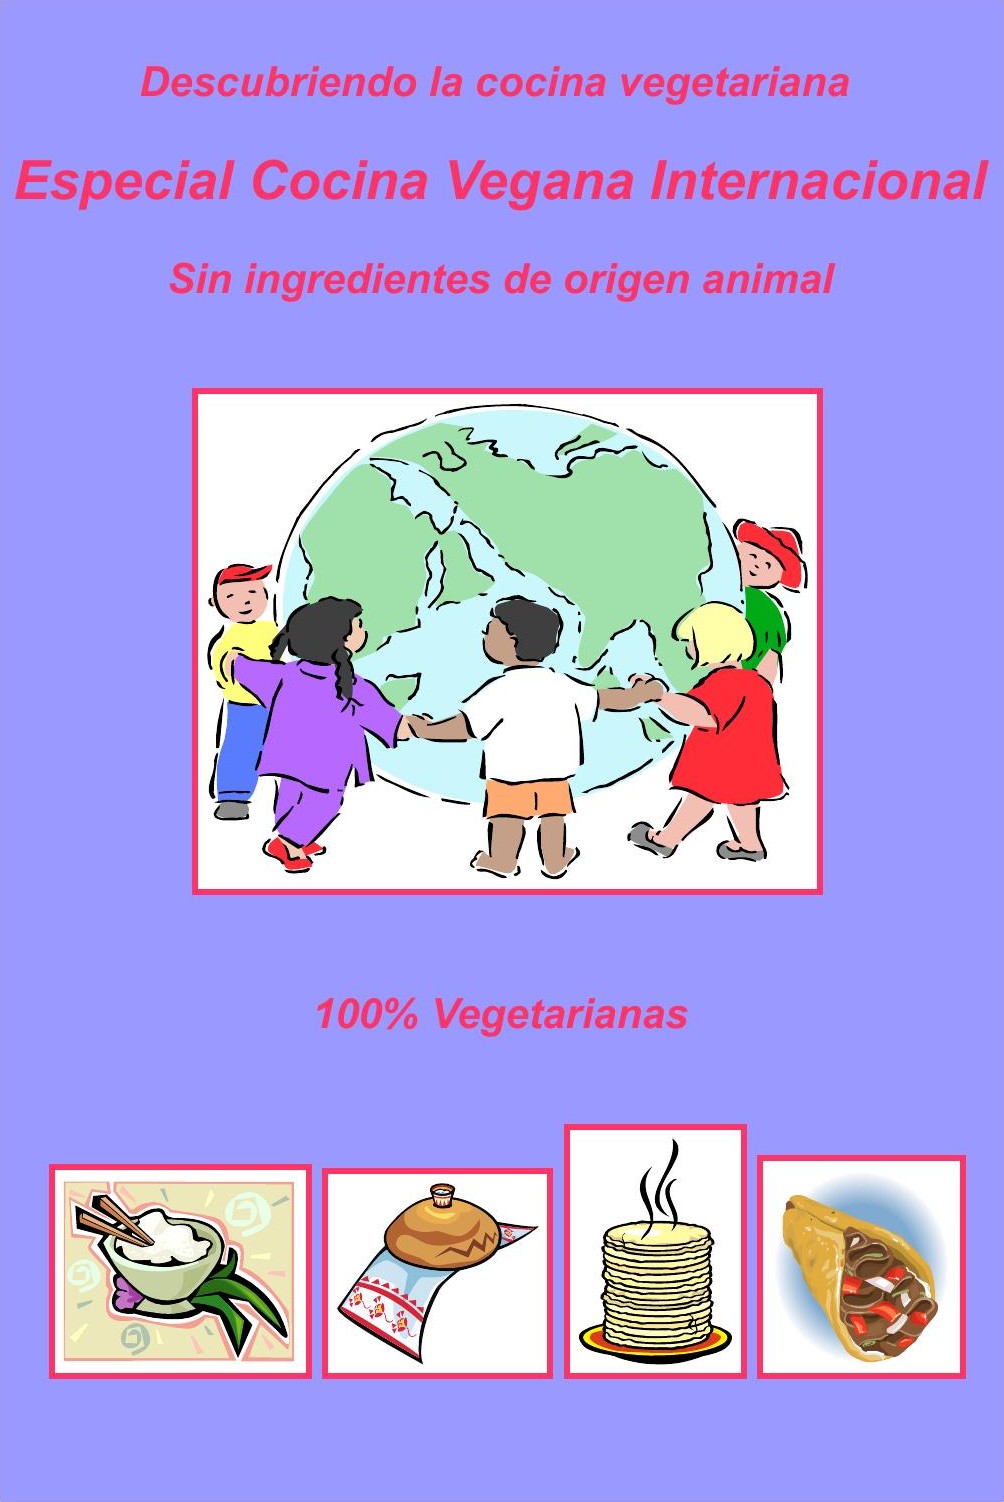 Especial Cocina Vegana Internacional